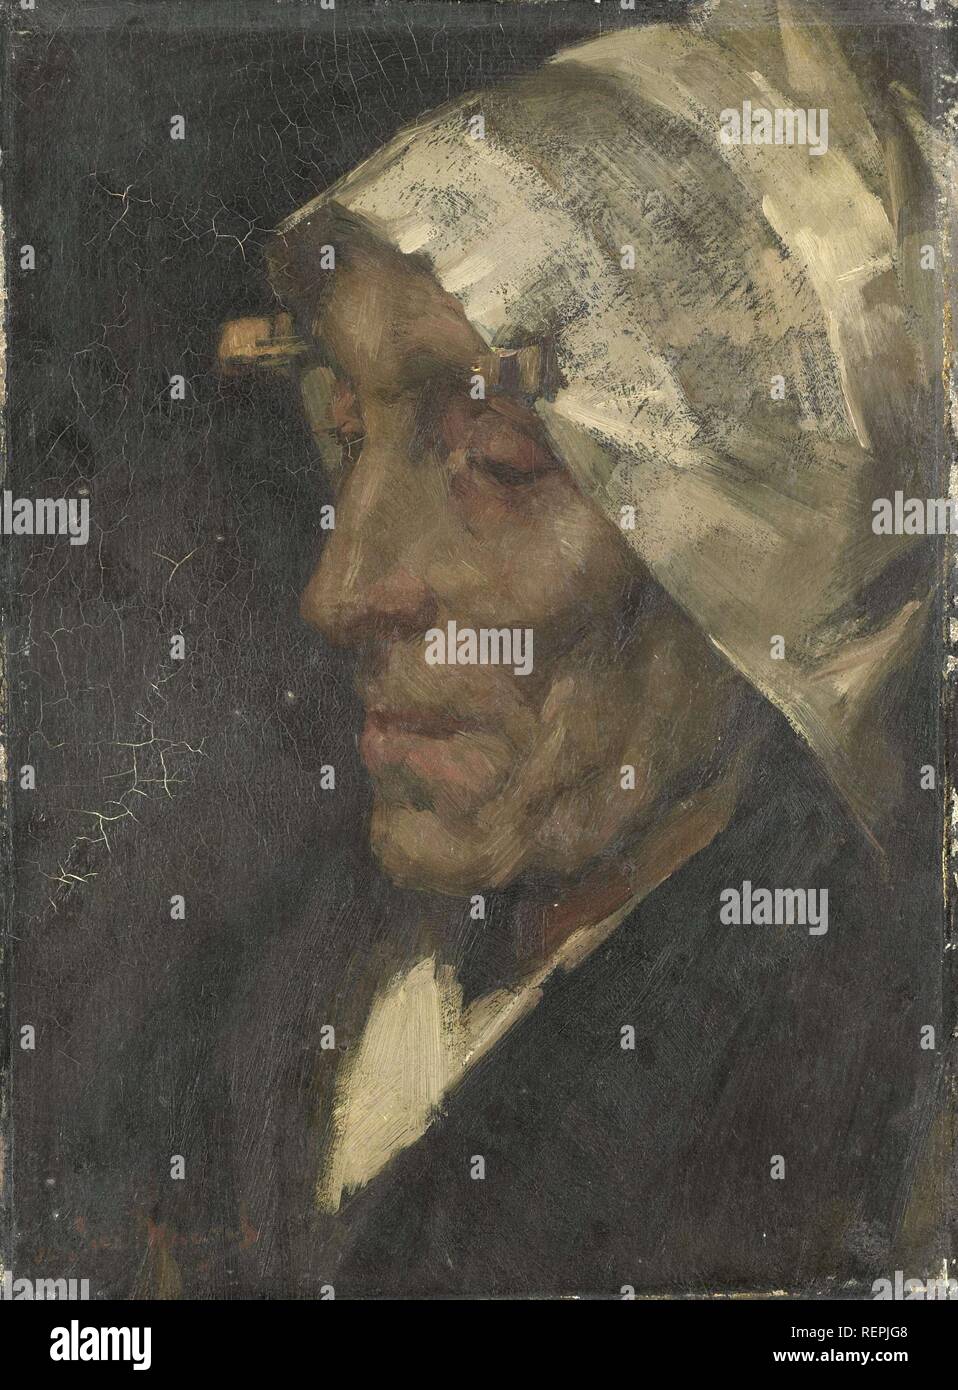 Fisherman's Frau. Datierung: 1880 - 1900. Maße: H 40,5 cm x W 30,2 cm x T 3,4 cm, d 10,8 cm. Museum: Rijksmuseum, Amsterdam. Thema: Marinus van der Maarel. Stockfoto